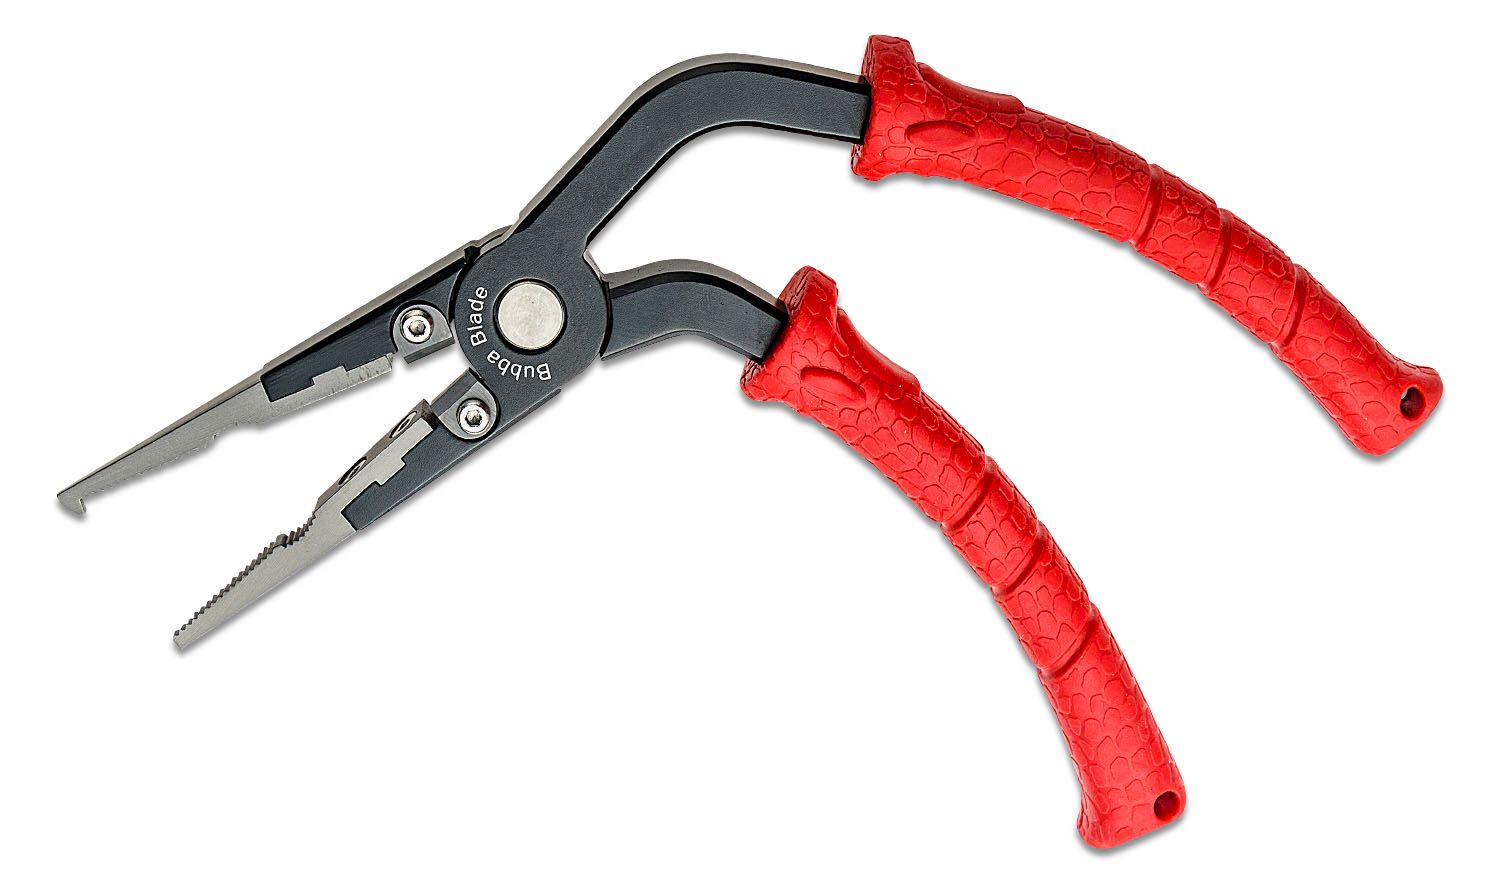 Bubba Blade 6.5 Pistol Grip Split Ring Fishing Pliers, Red TPR Handles,  Black Nylon Sheath - KnifeCenter - 1085969 - Discontinued